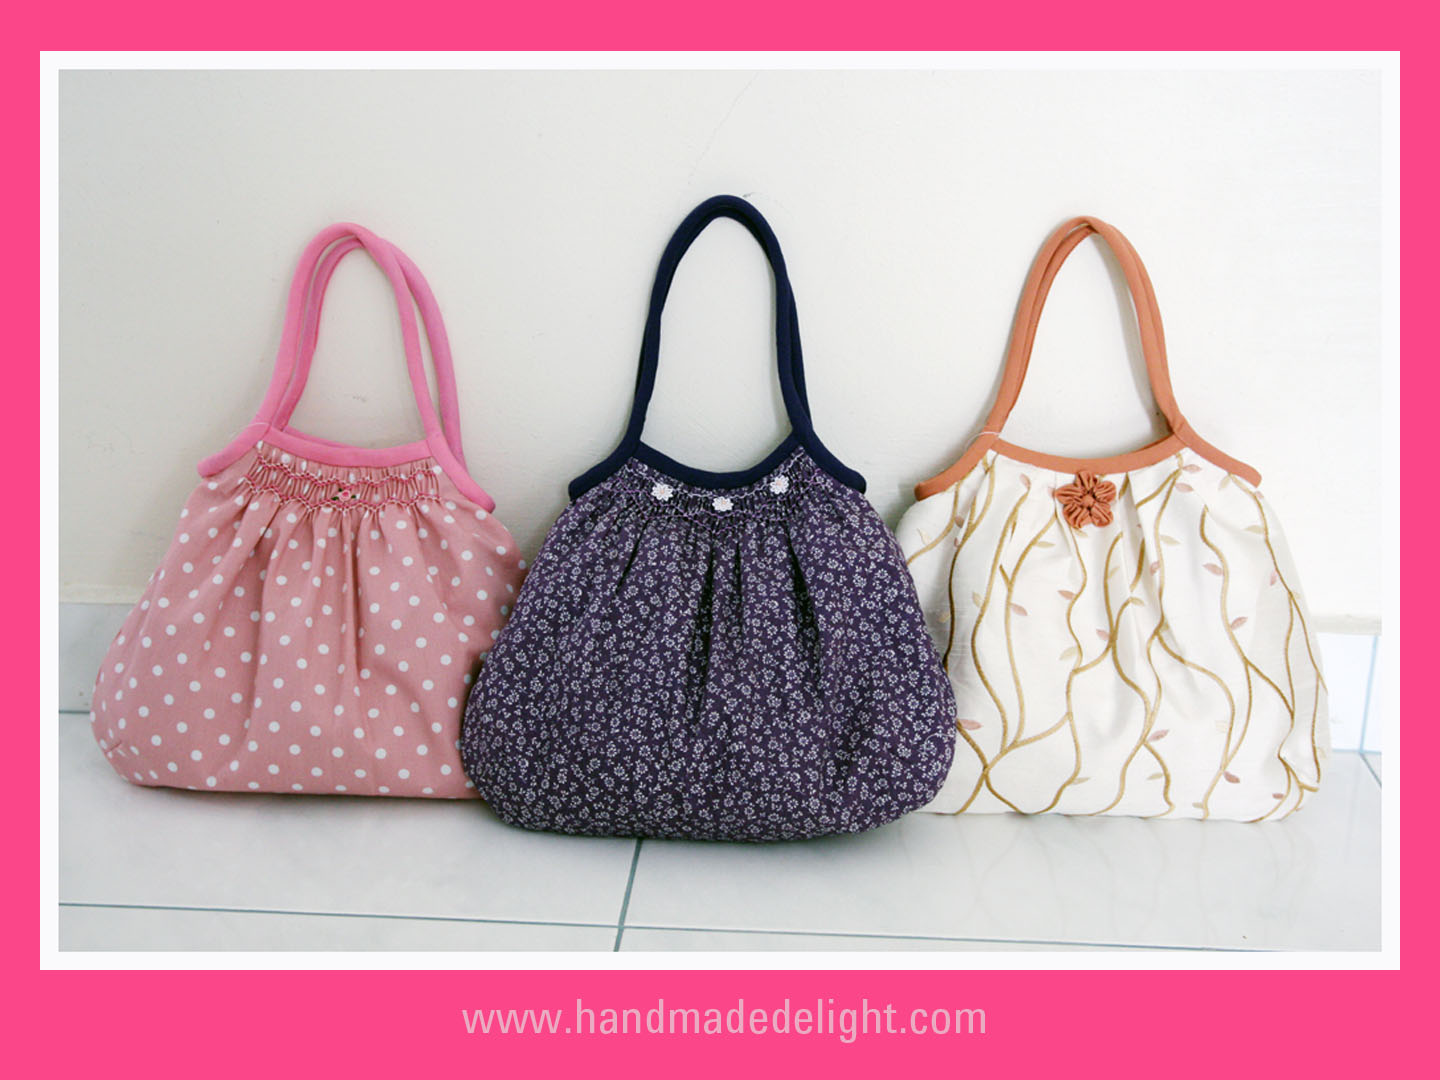 Handmade Delight: Smocked Bags